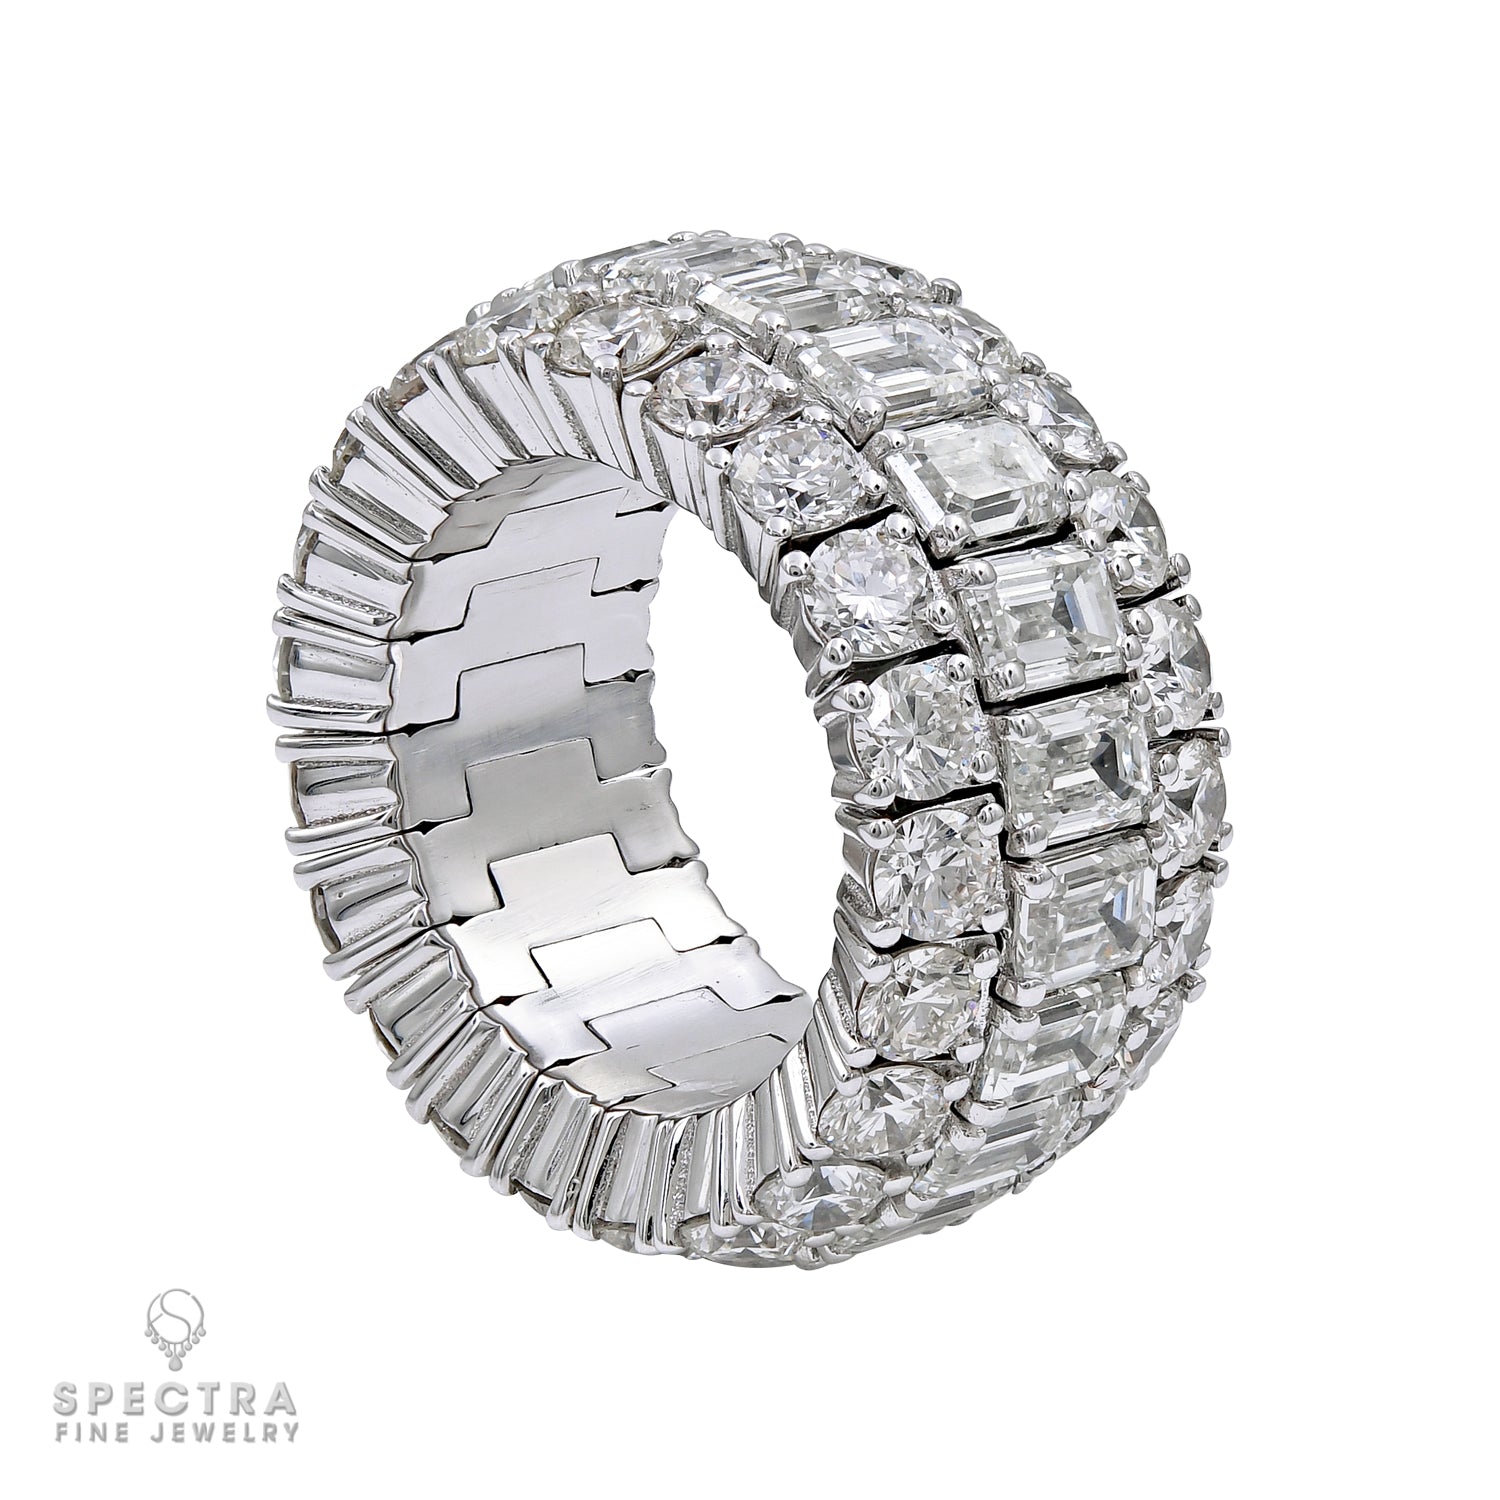 Spectra Fine Jewelry 11.13 Carat Emerald Cut Diamond Ring